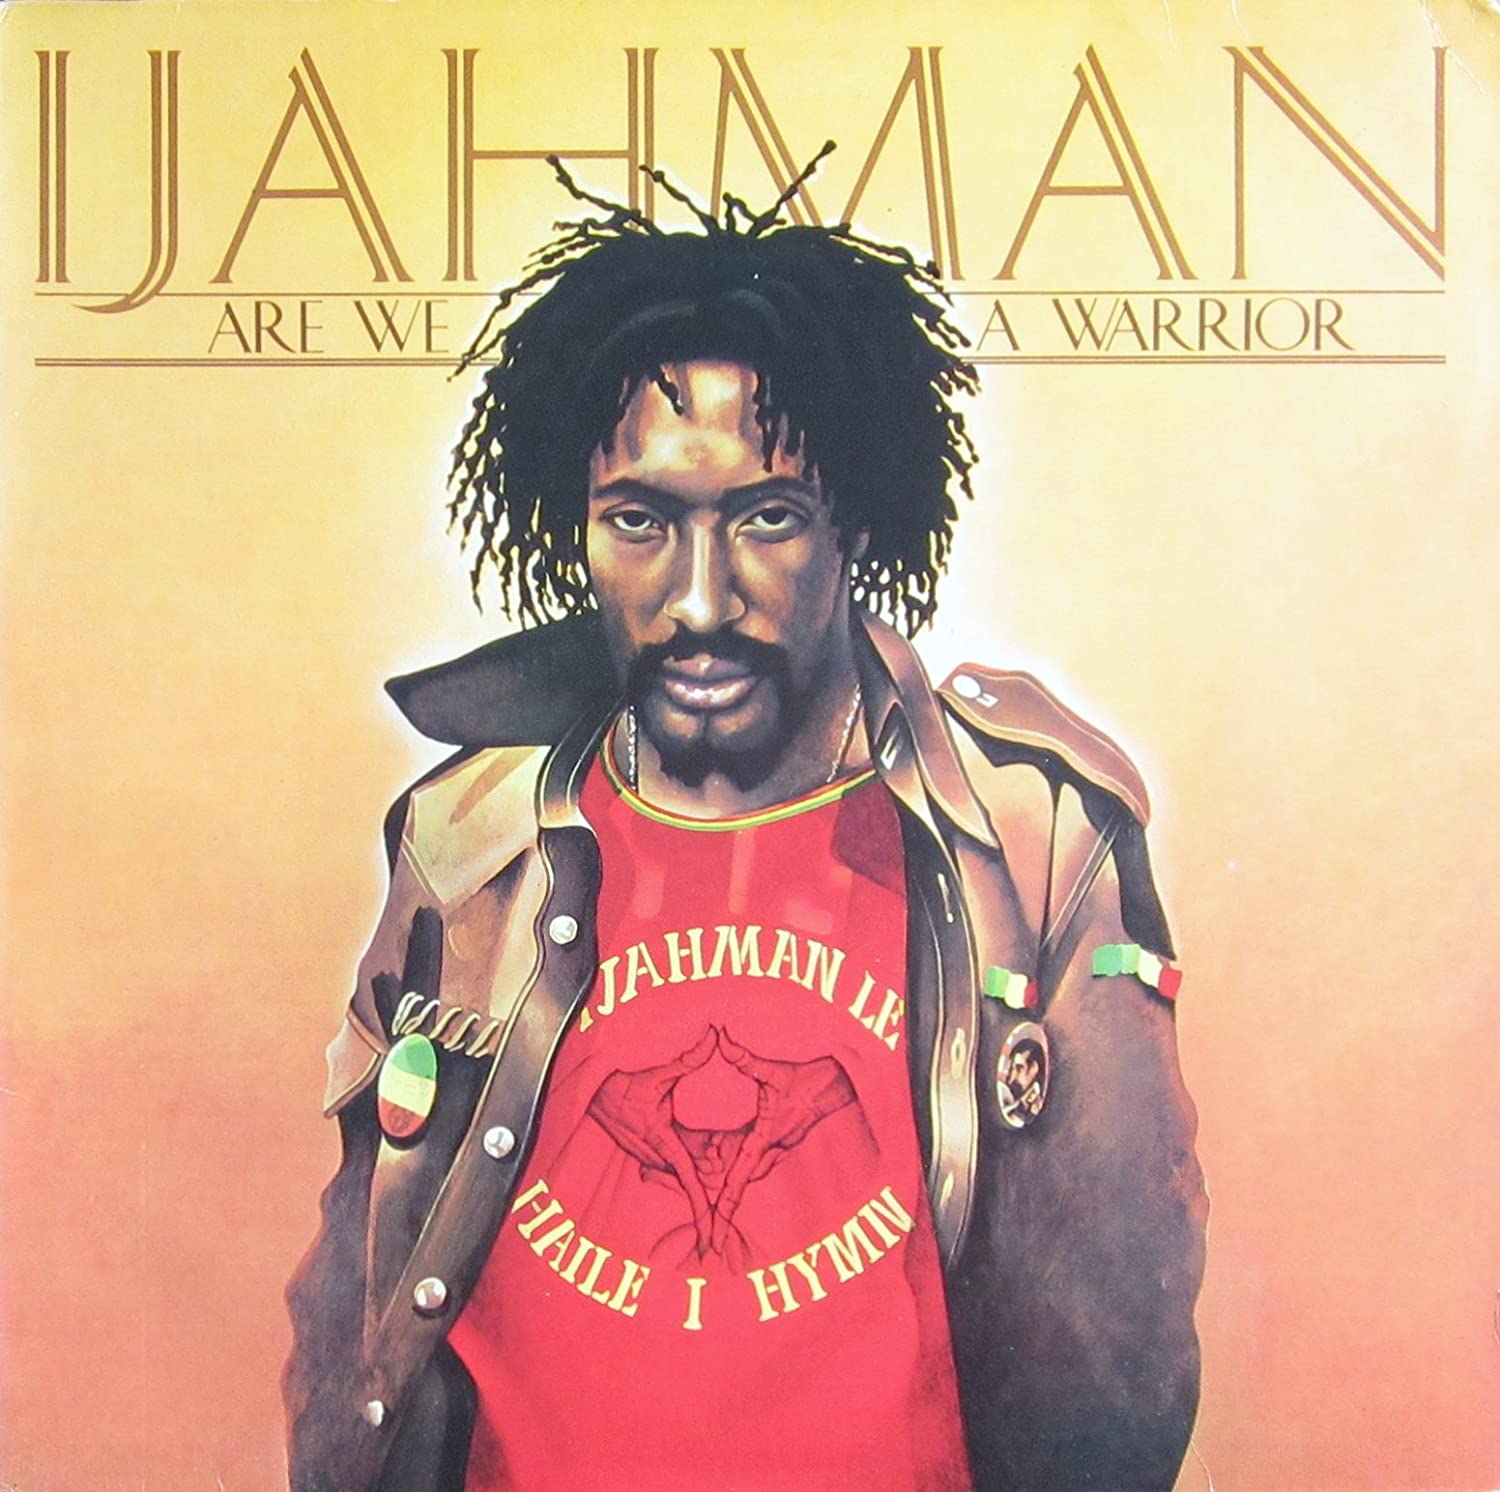 IJAHMAN - Are We A Warrior - LP - 180g Vinyl